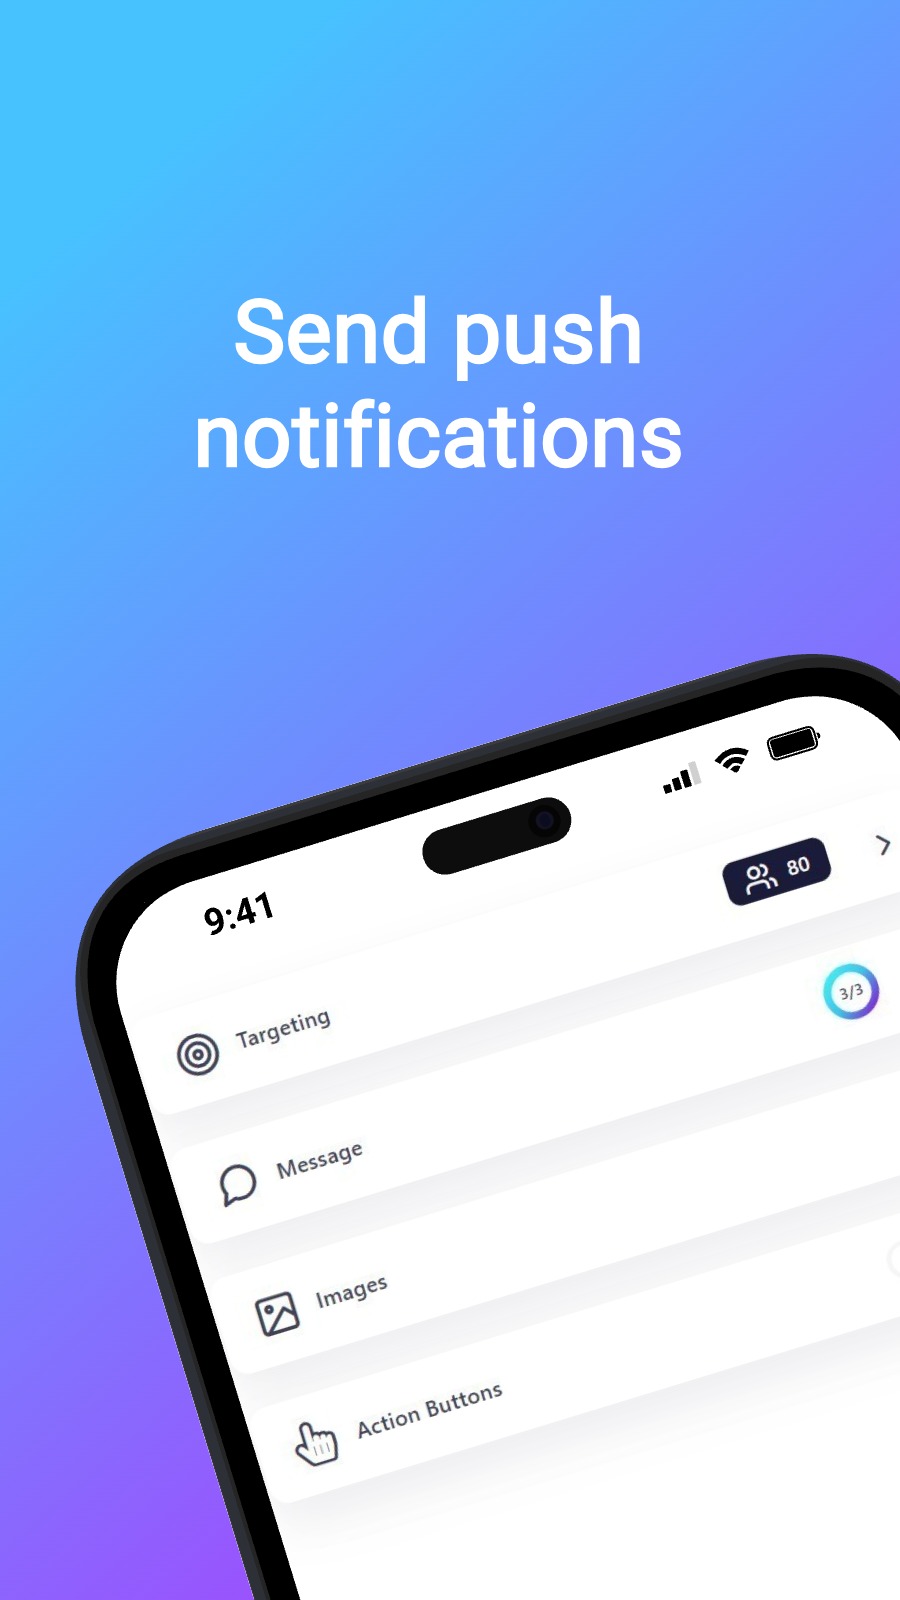 Send push notifications